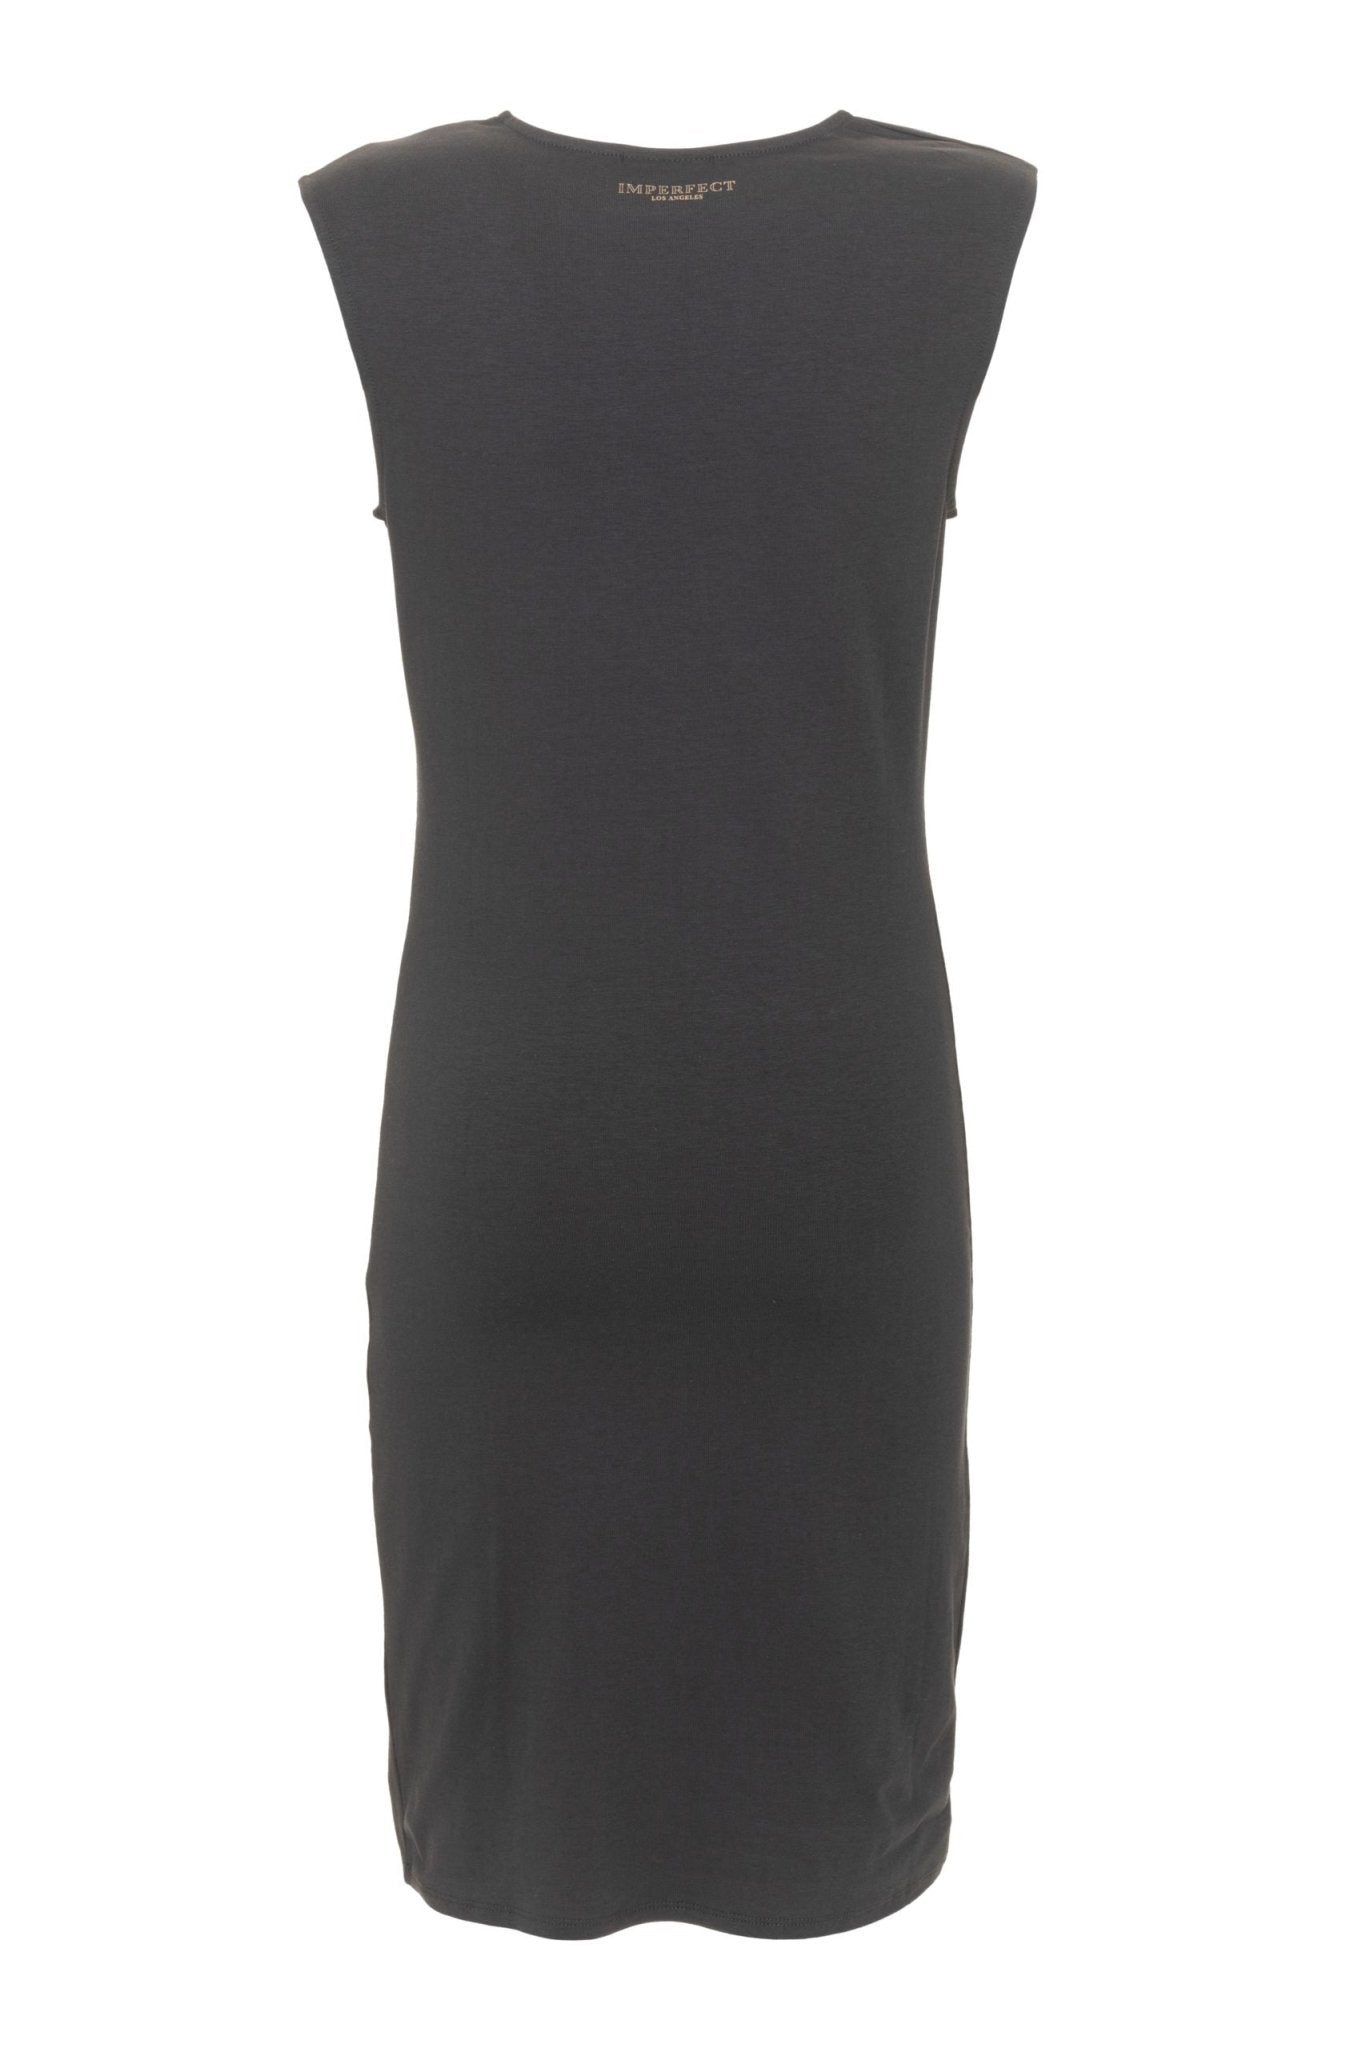 Imperfect Black Cotton Dress - Fizigo